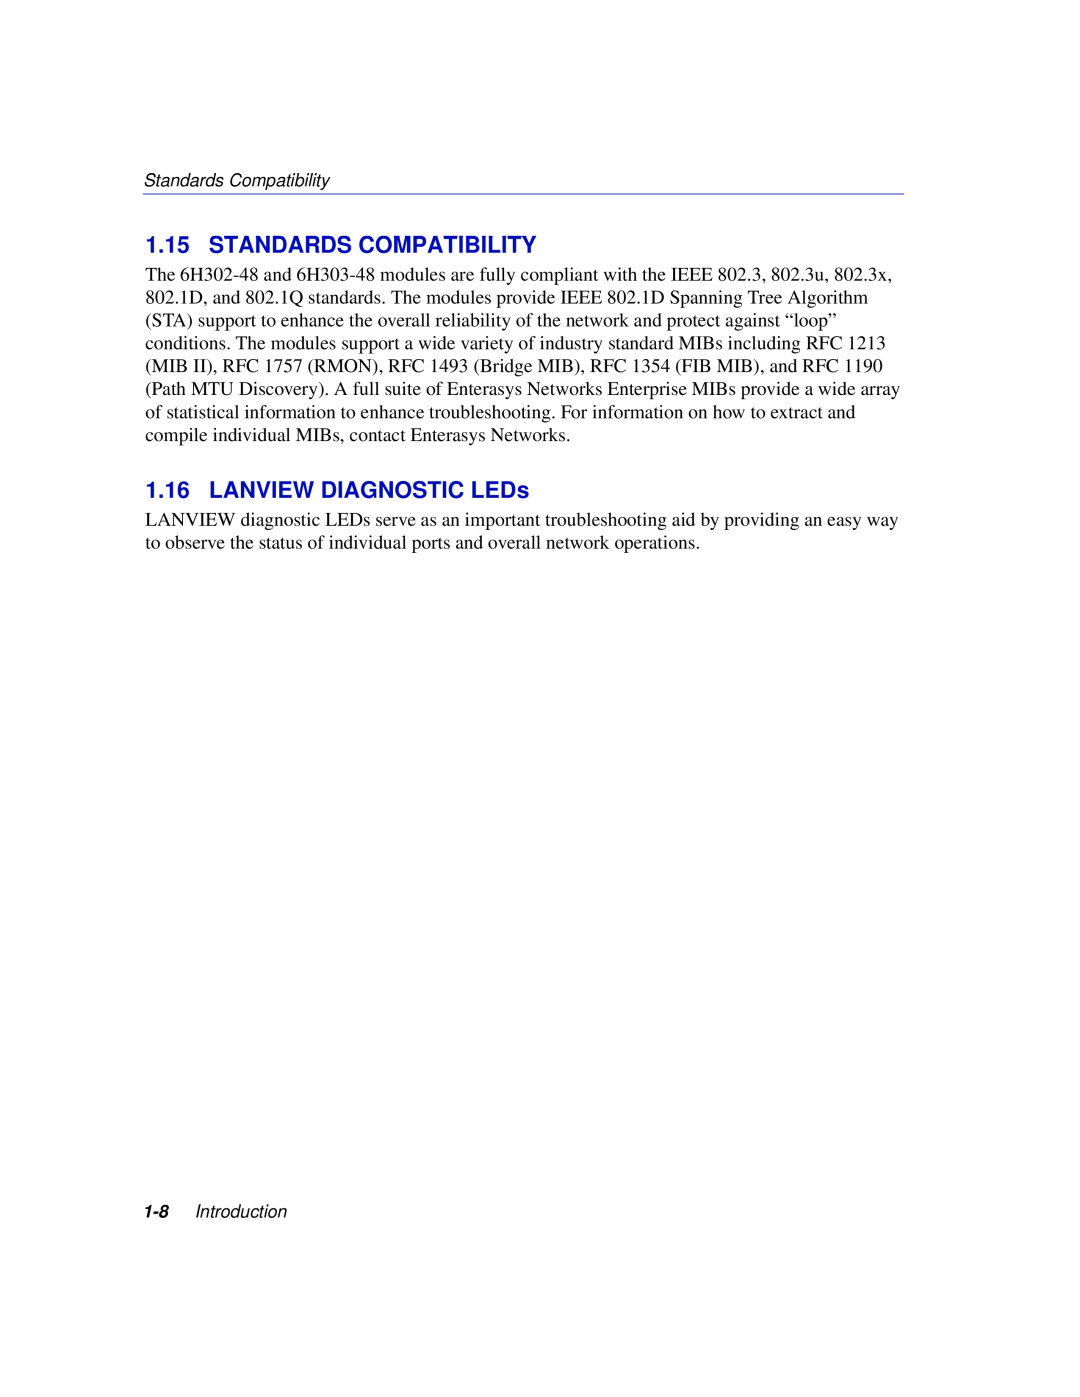 Enterasys Networks 6H302-48 manual Standards Compatibility, LANVIEW DIAGNOSTIC LEDs, Introduction 